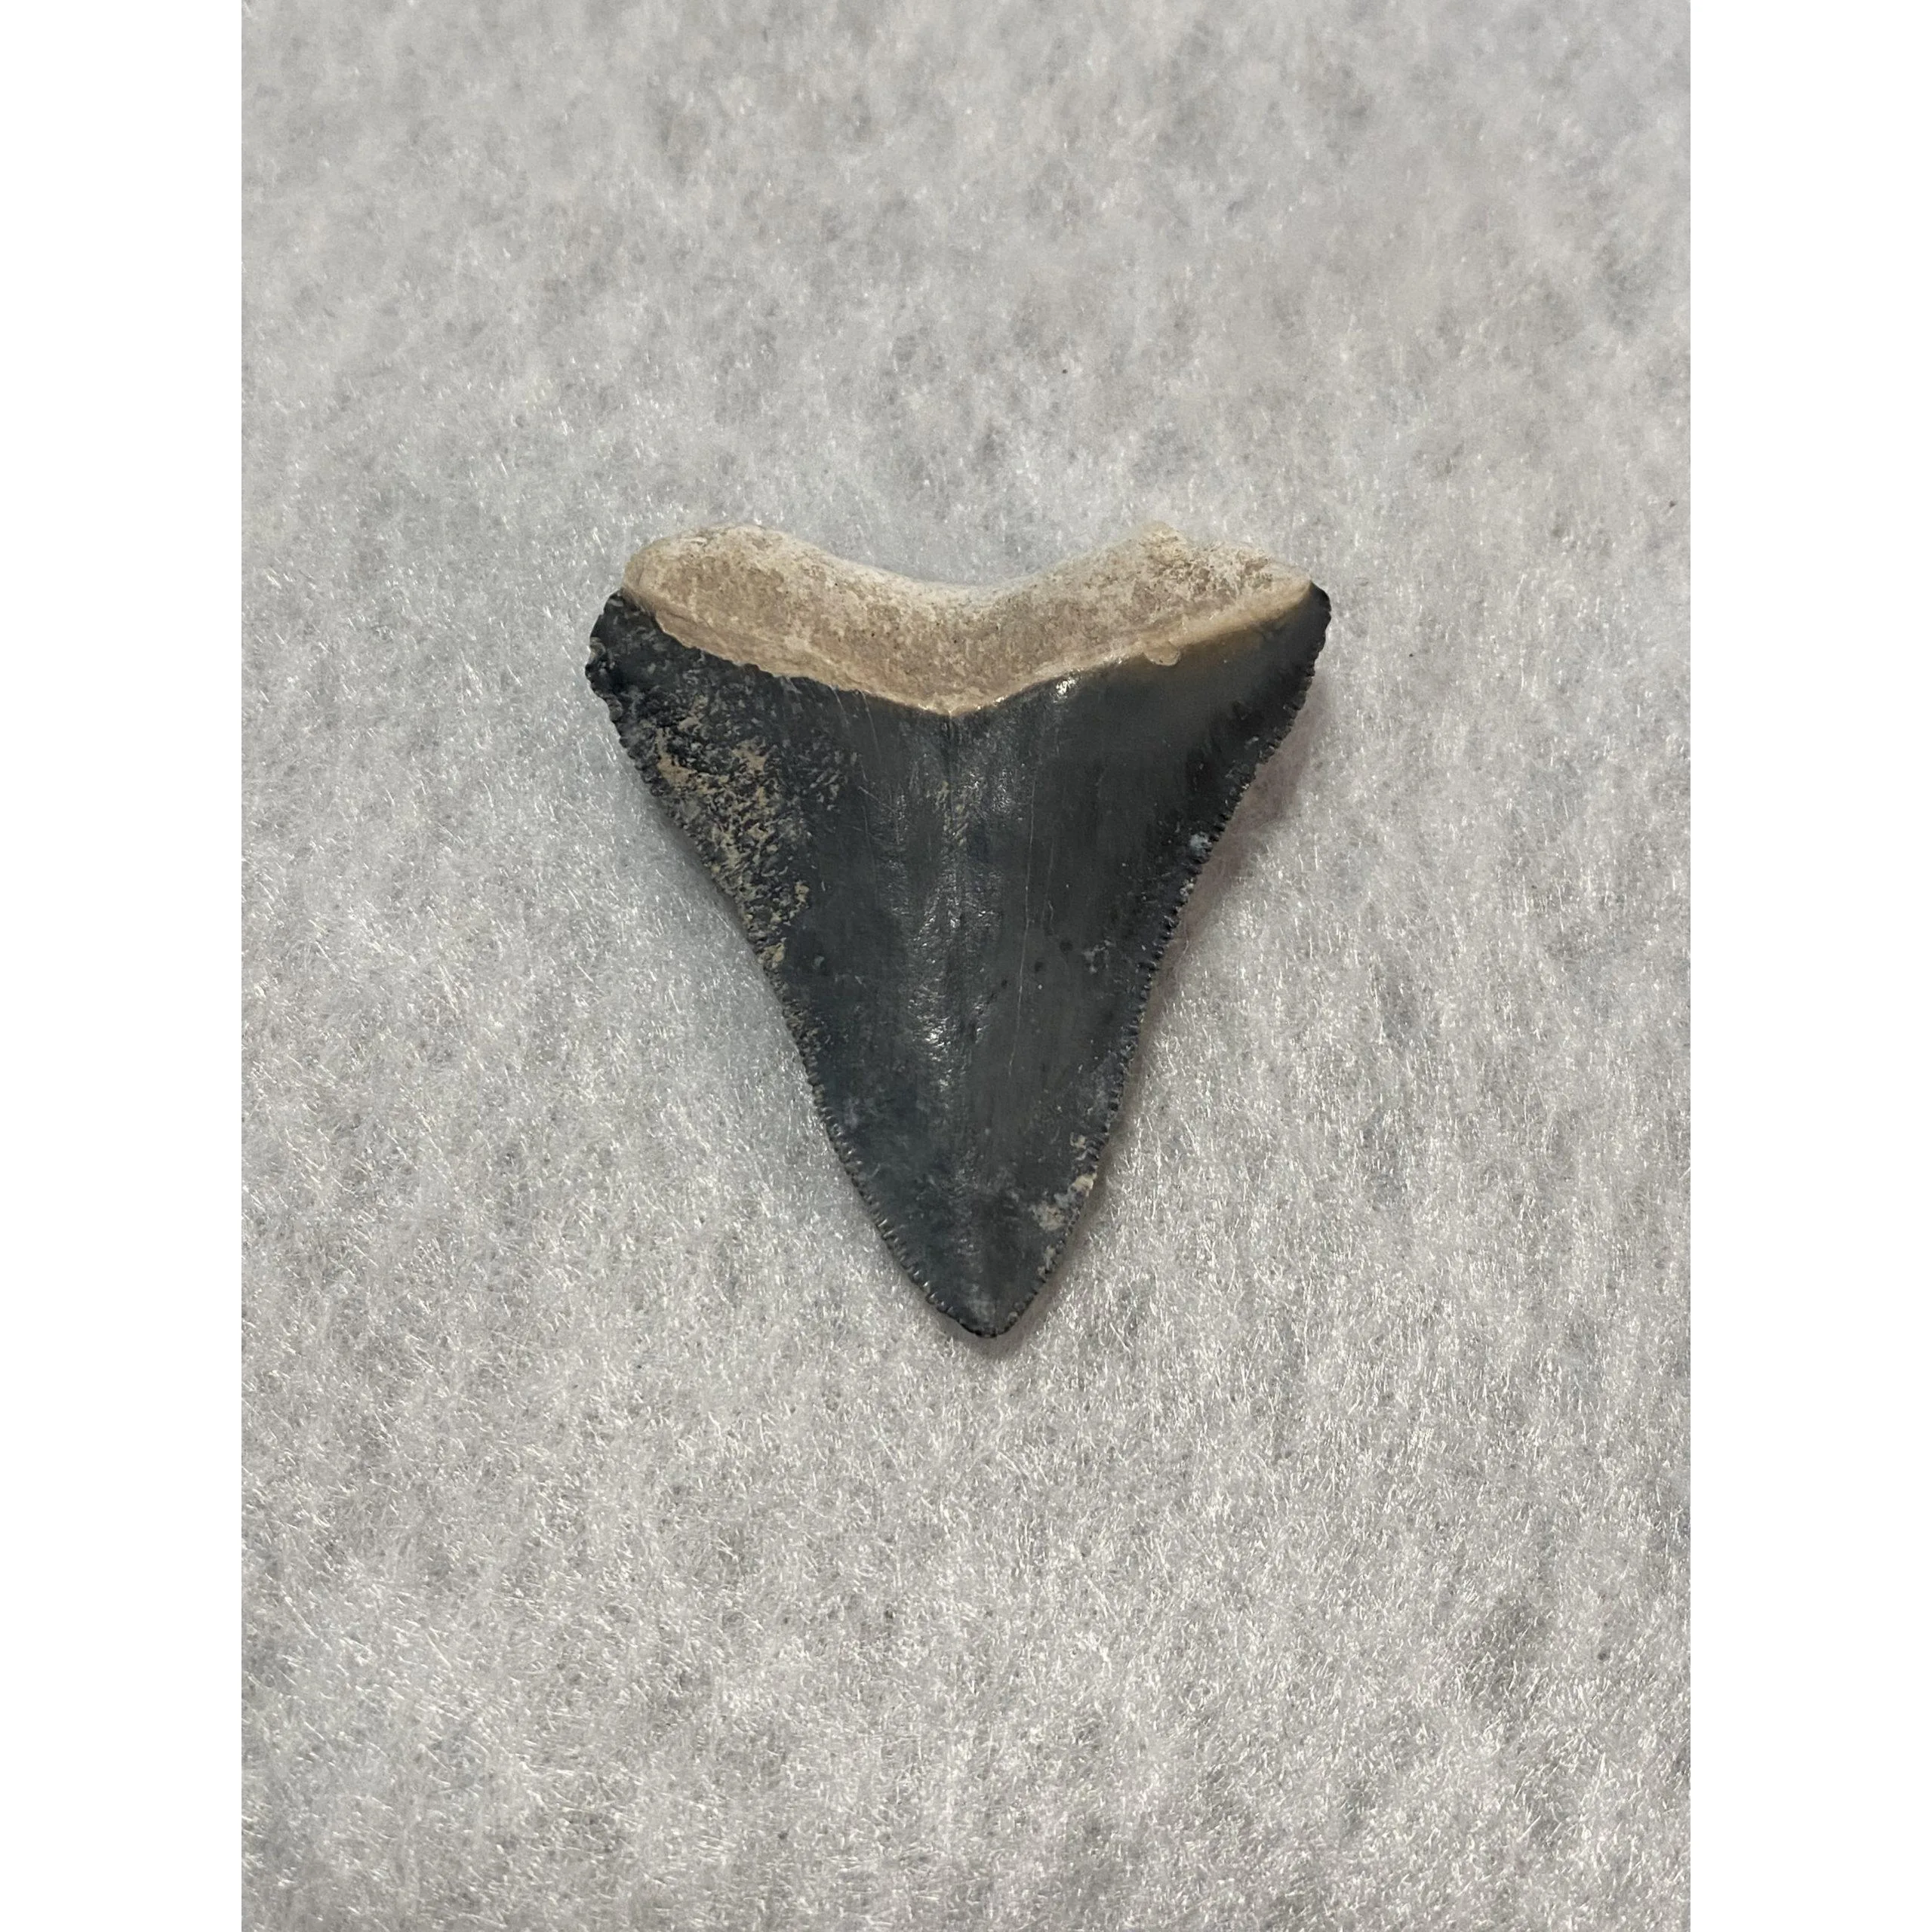 Megalodon Tooth, Bone Valley, Florida, 1.77 inch Prehistoric Online